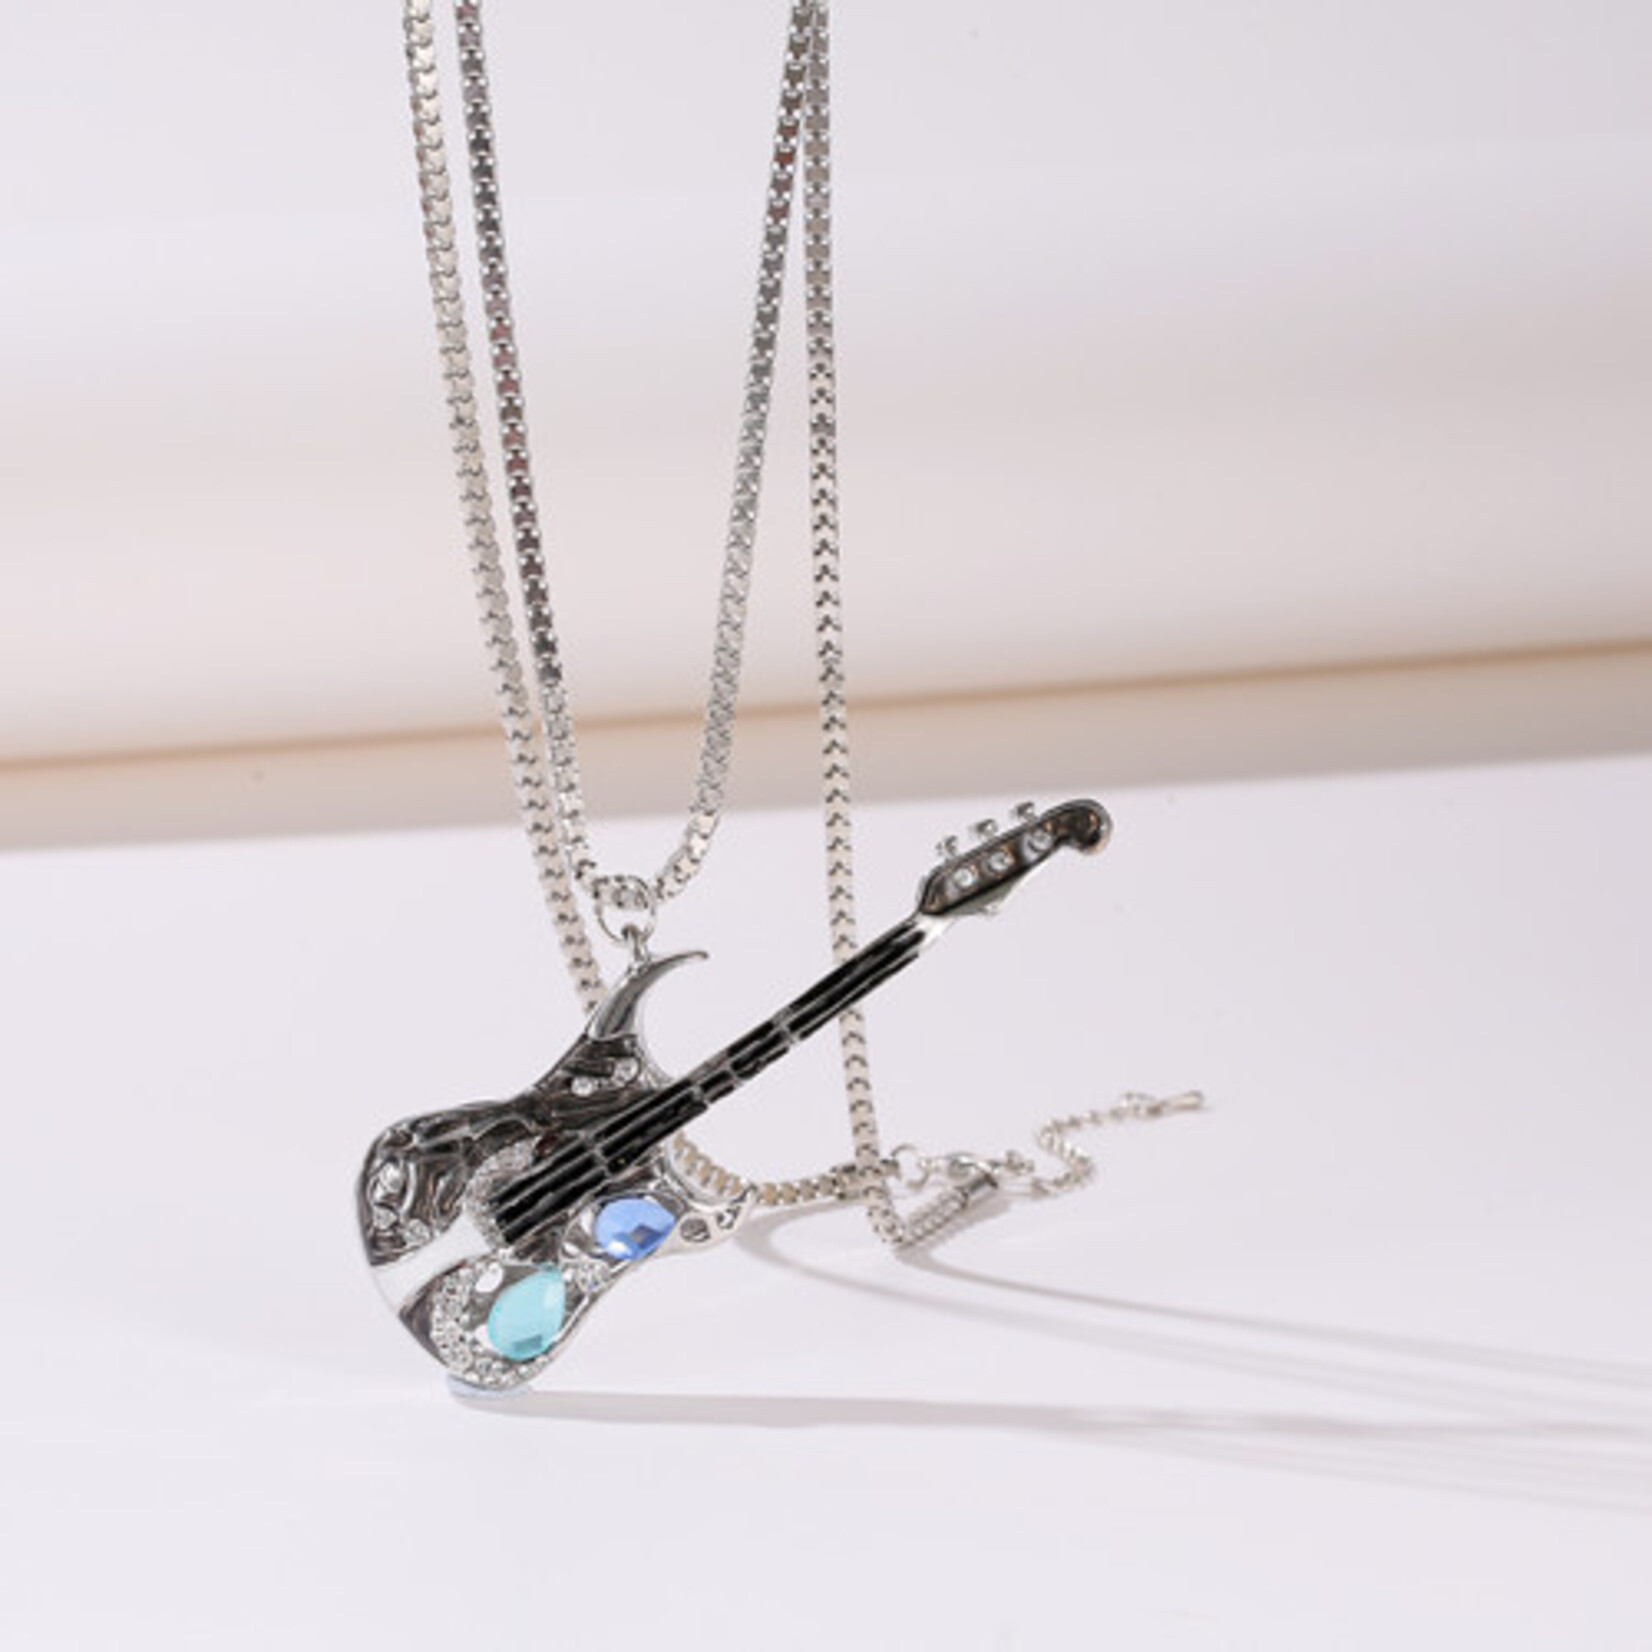 fashion jewelry Fashion jewelry silver box chain with guitar pendant